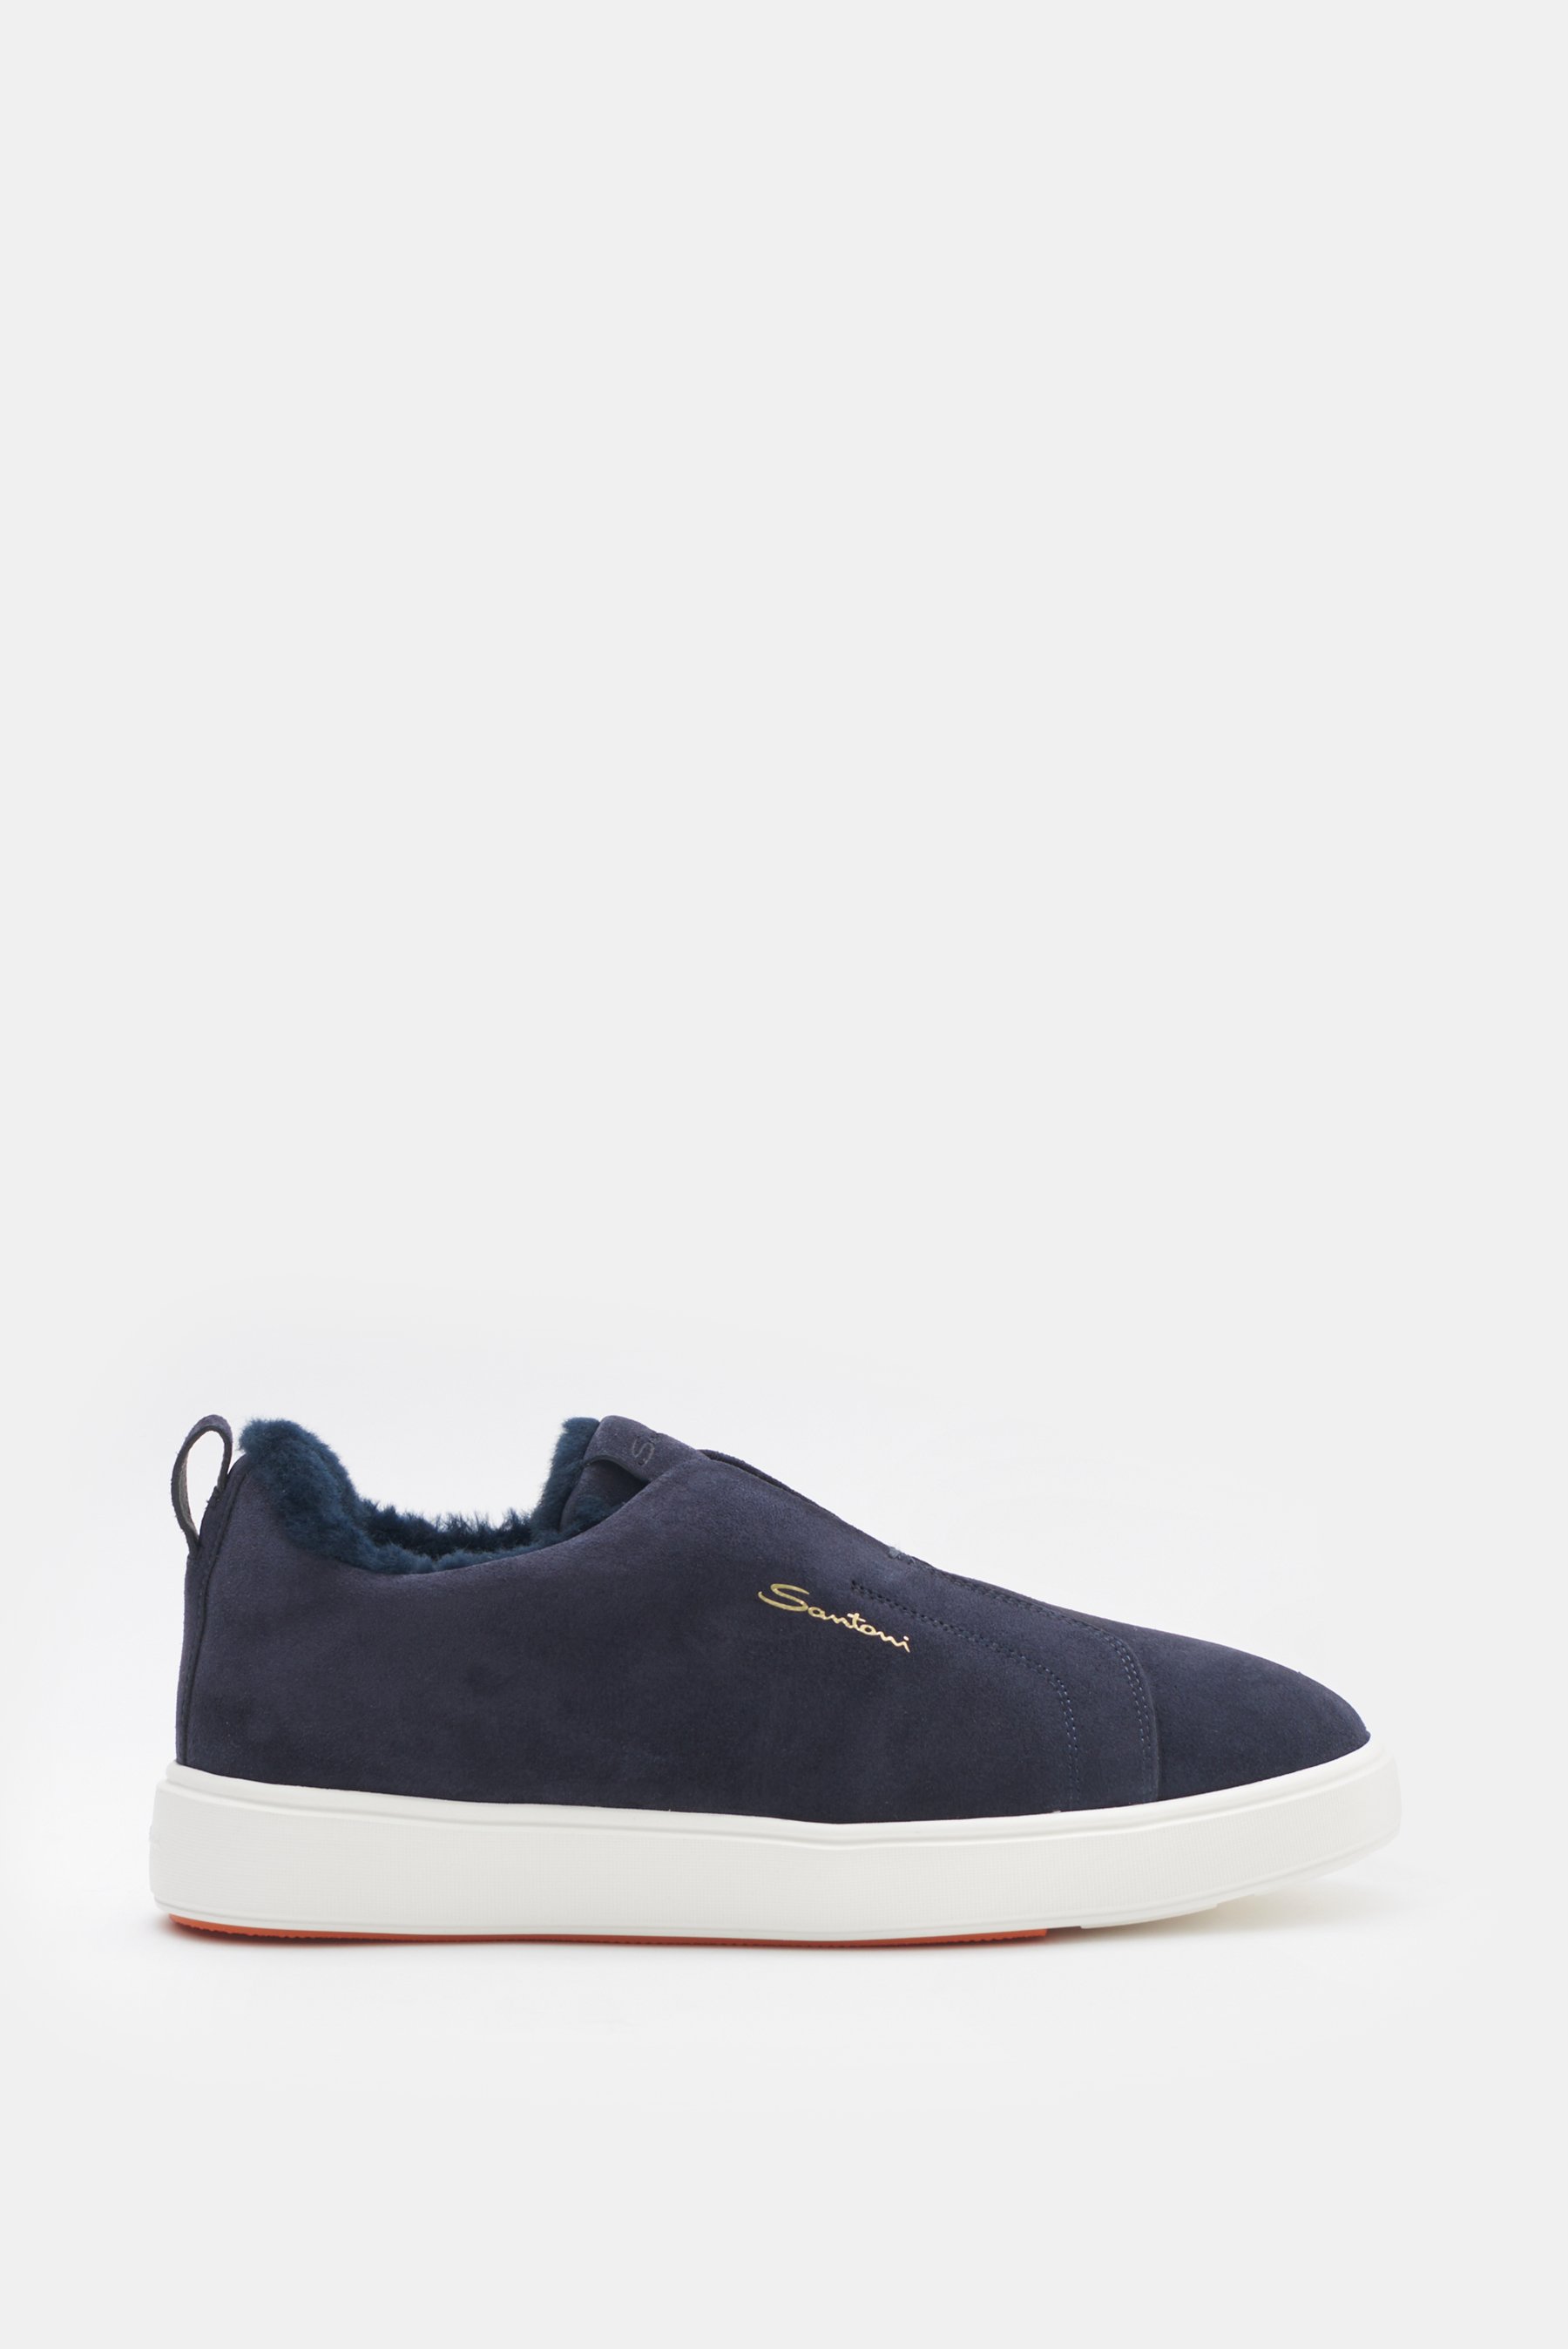 Santoni - Herren - Slip-on-Sneaker navy product